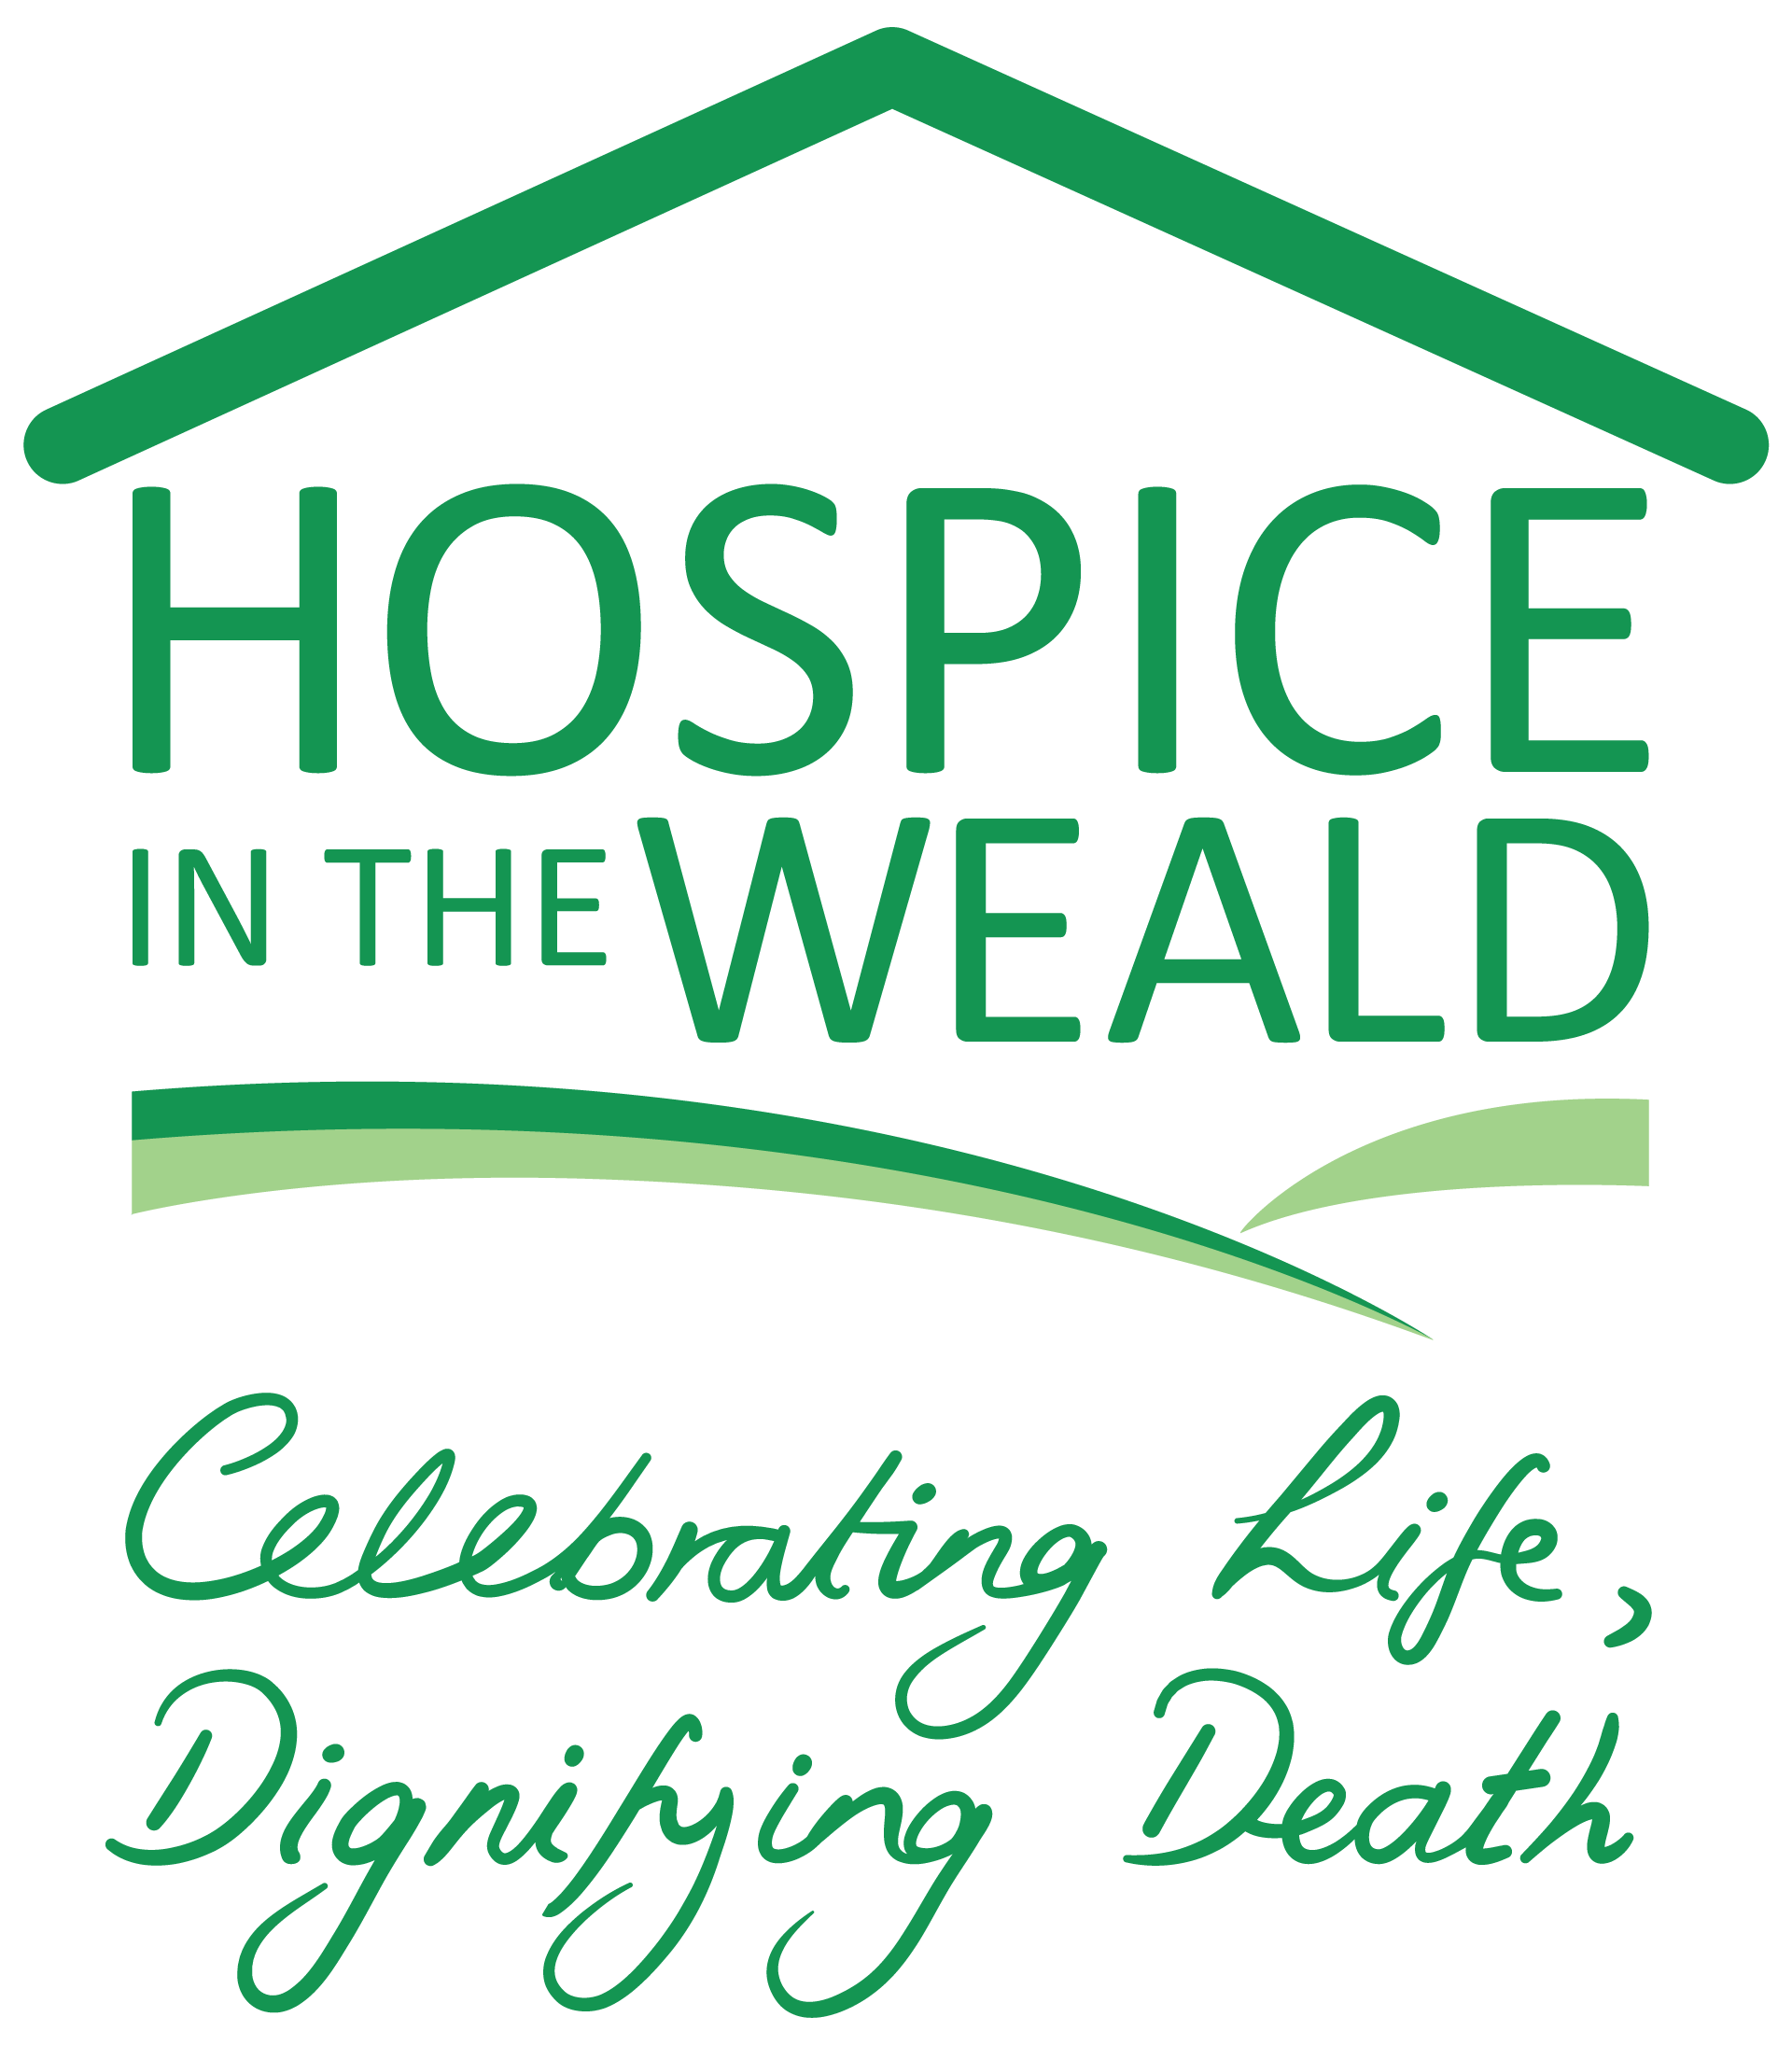 Hospice in the Weald logo